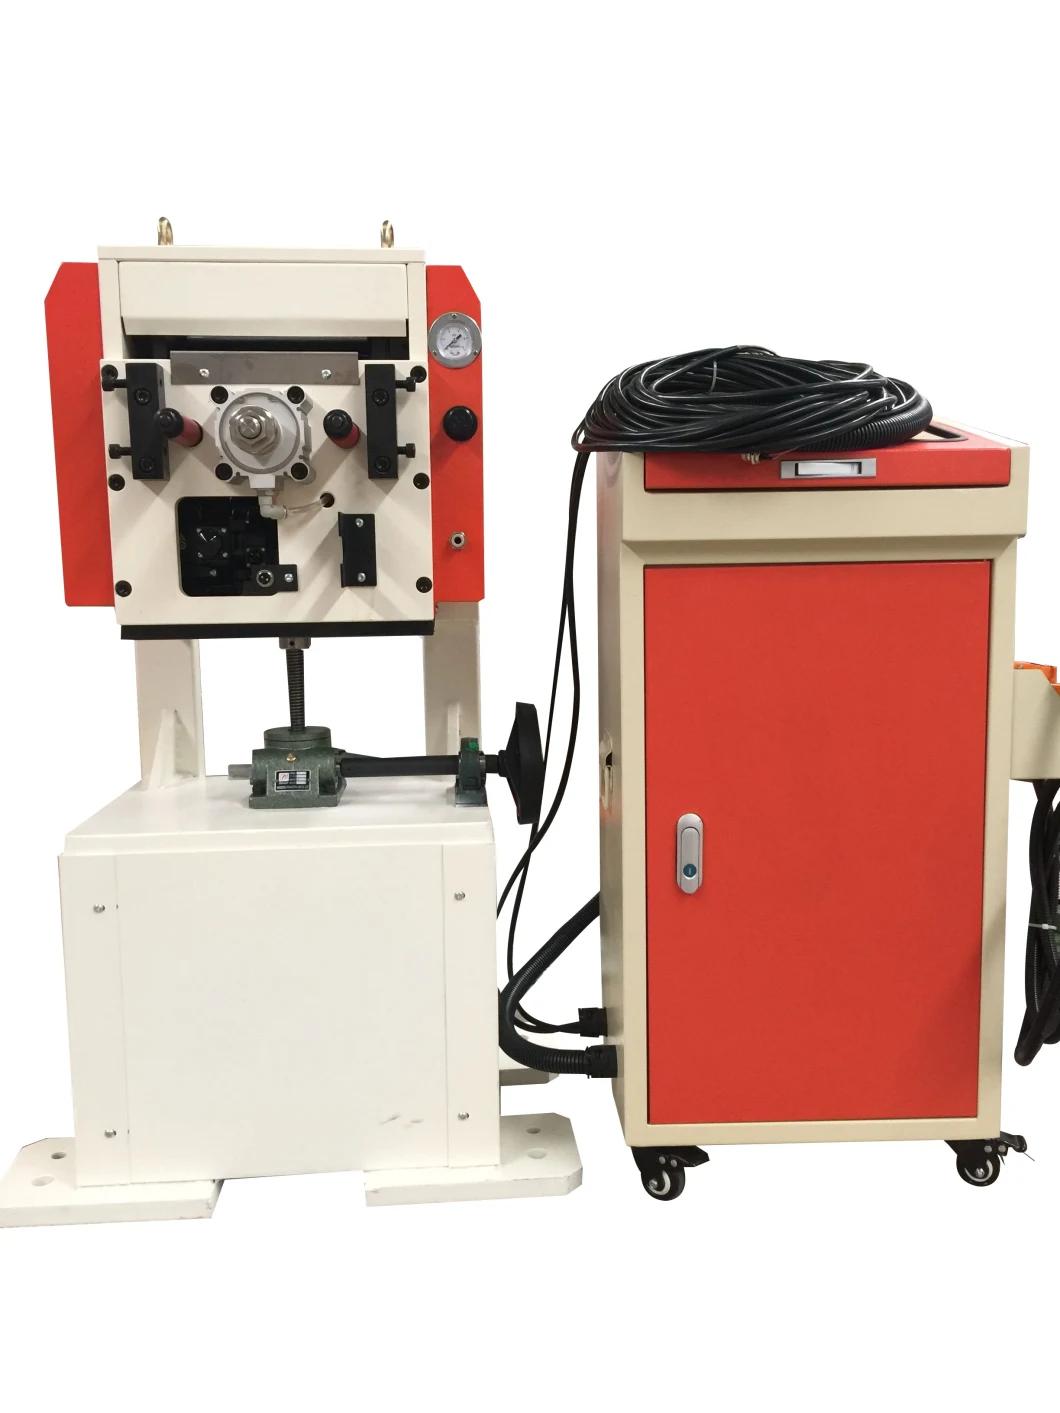 Metal Sheet Coil Automatic Nc Roll Feeder Machine Press Servo Feeder with Straightener Feeder and Servo Presses